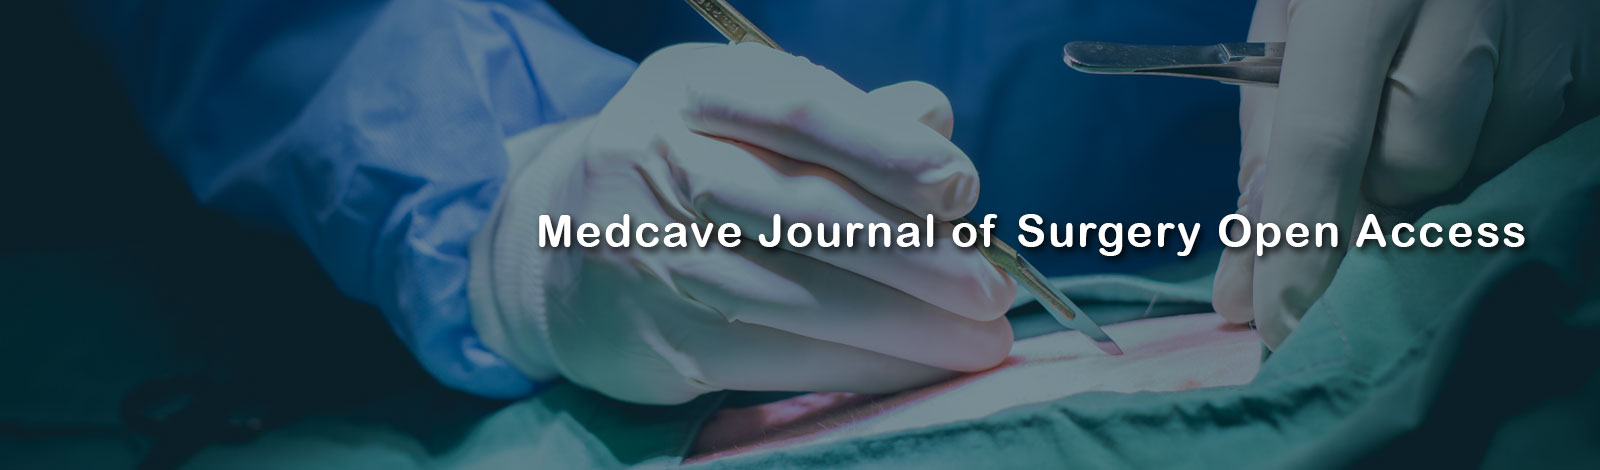 Medcave Journal of Surgery Open Access